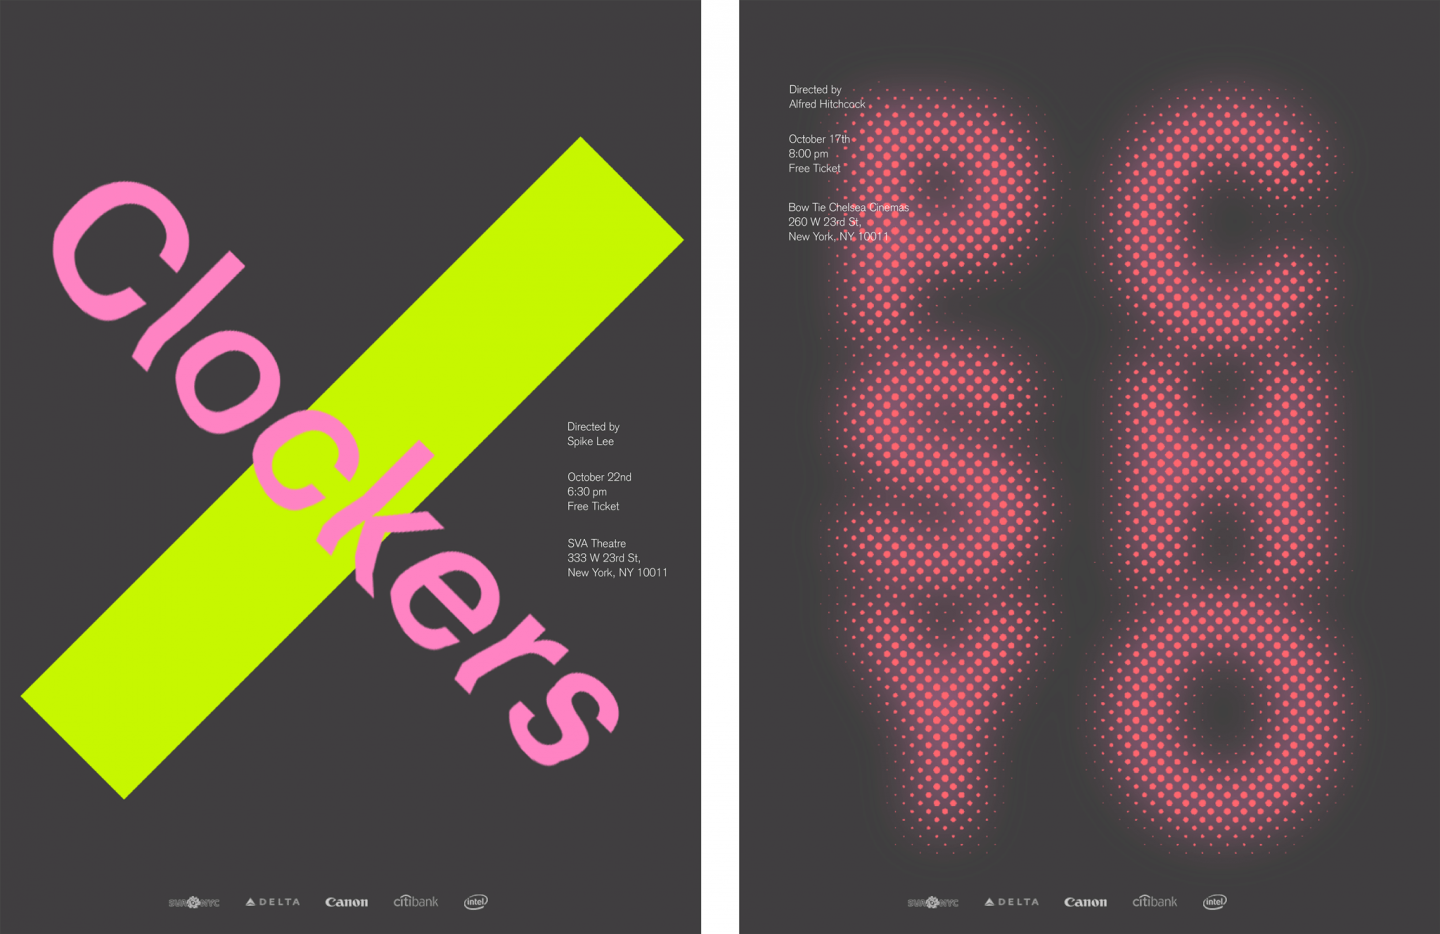 Film Festival Poster Series by Jihyang Lim – SVA Design